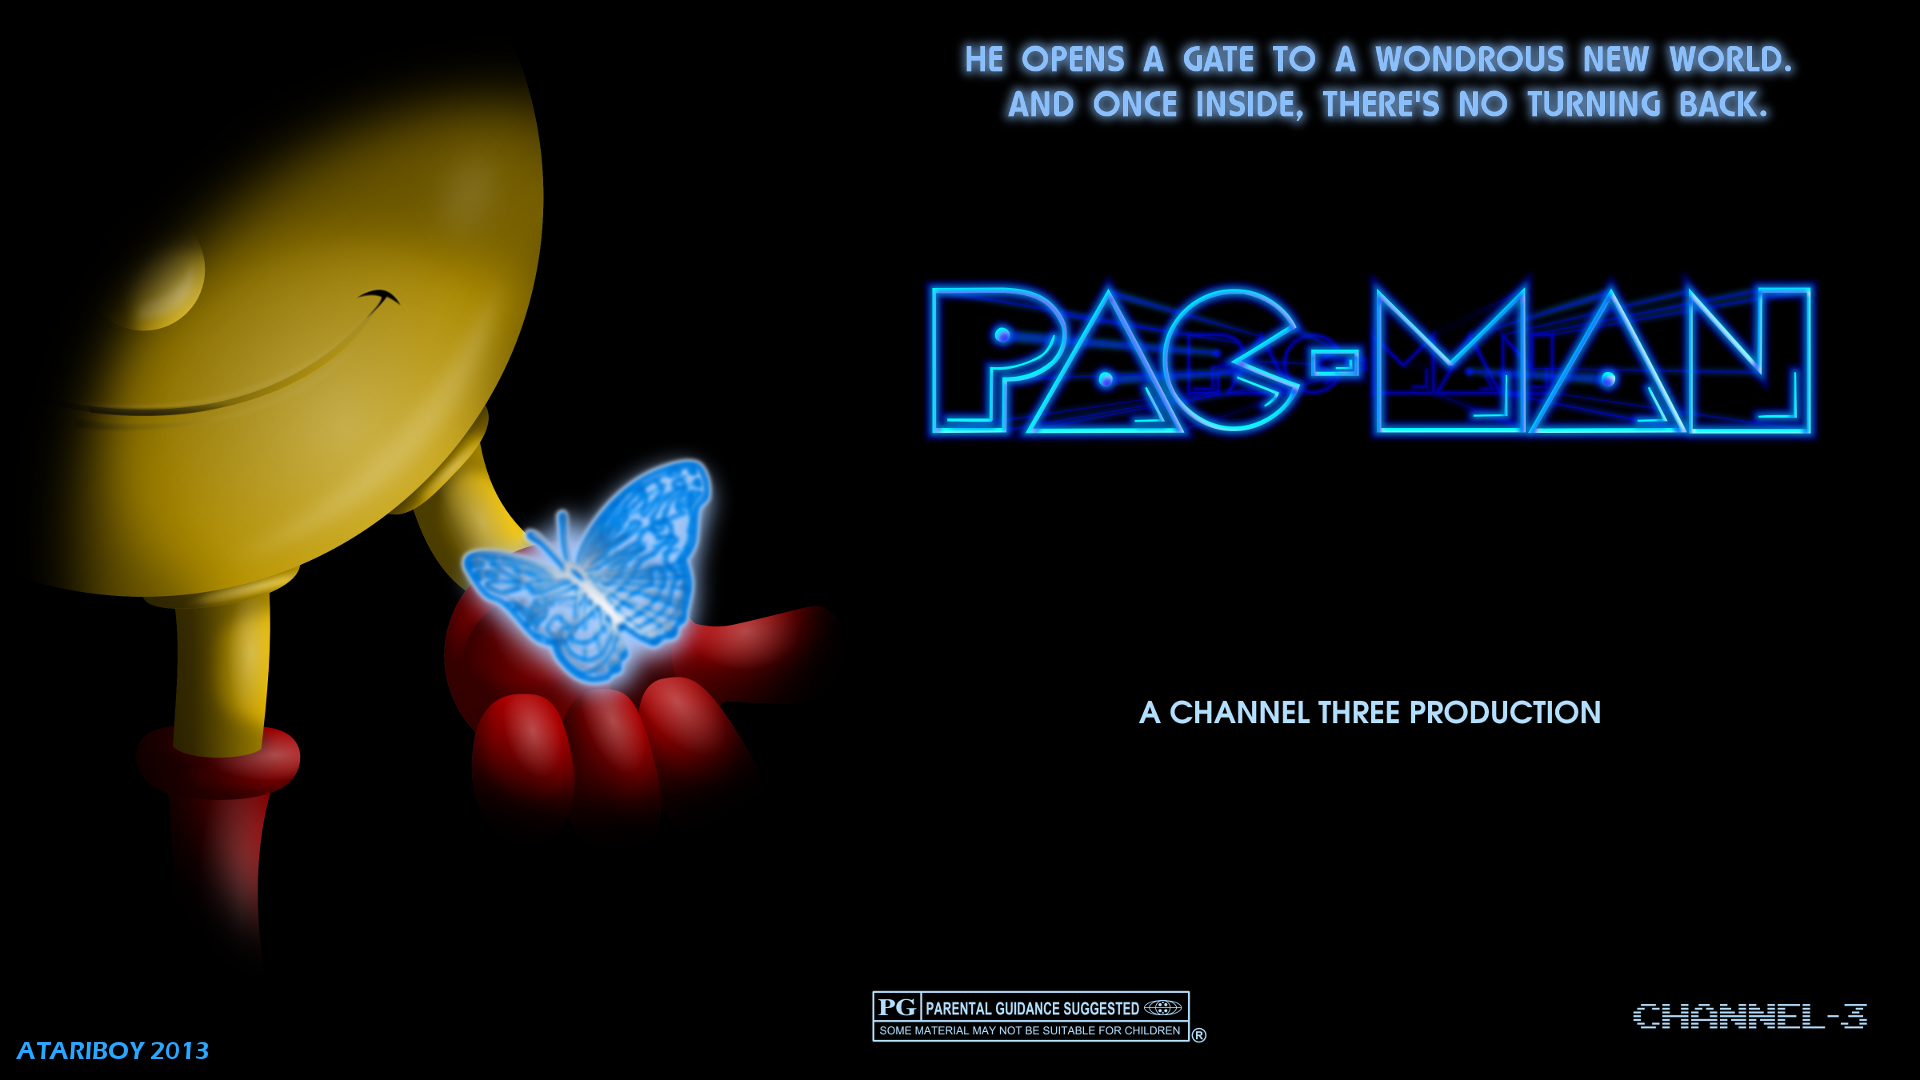 Pacman Fanart Poster - TYPE B